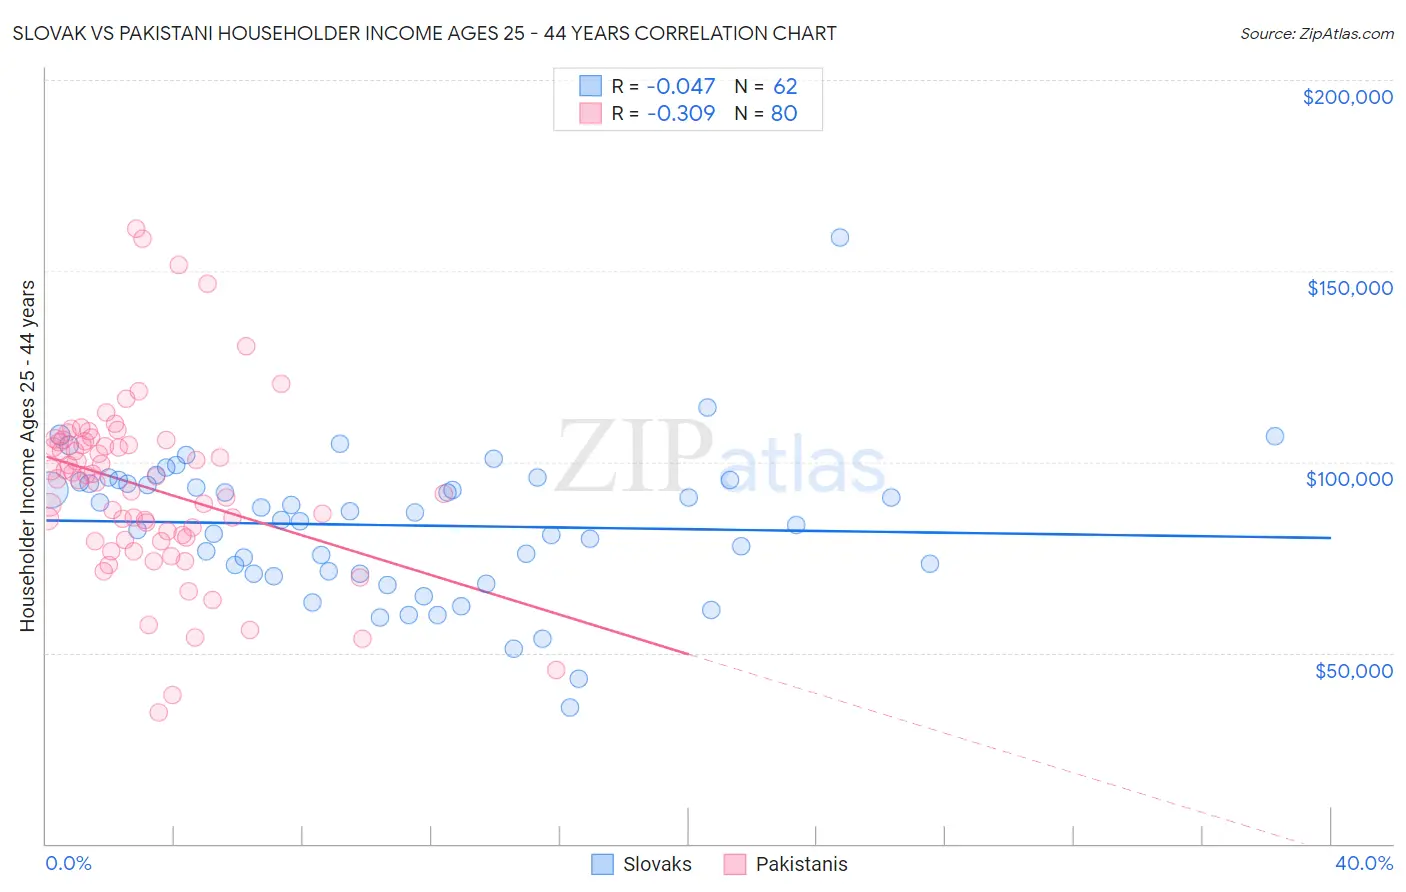 Slovak vs Pakistani Householder Income Ages 25 - 44 years